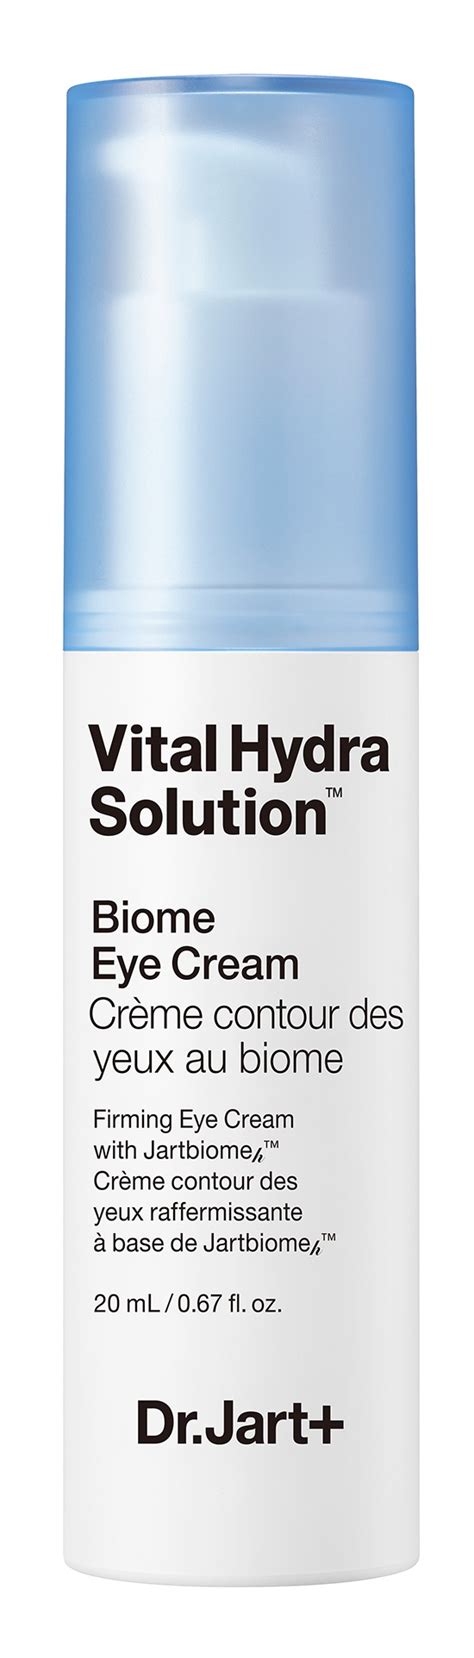 Dr Jart Vital Hydra Solution Biome Eye Cream Ingredients Explained